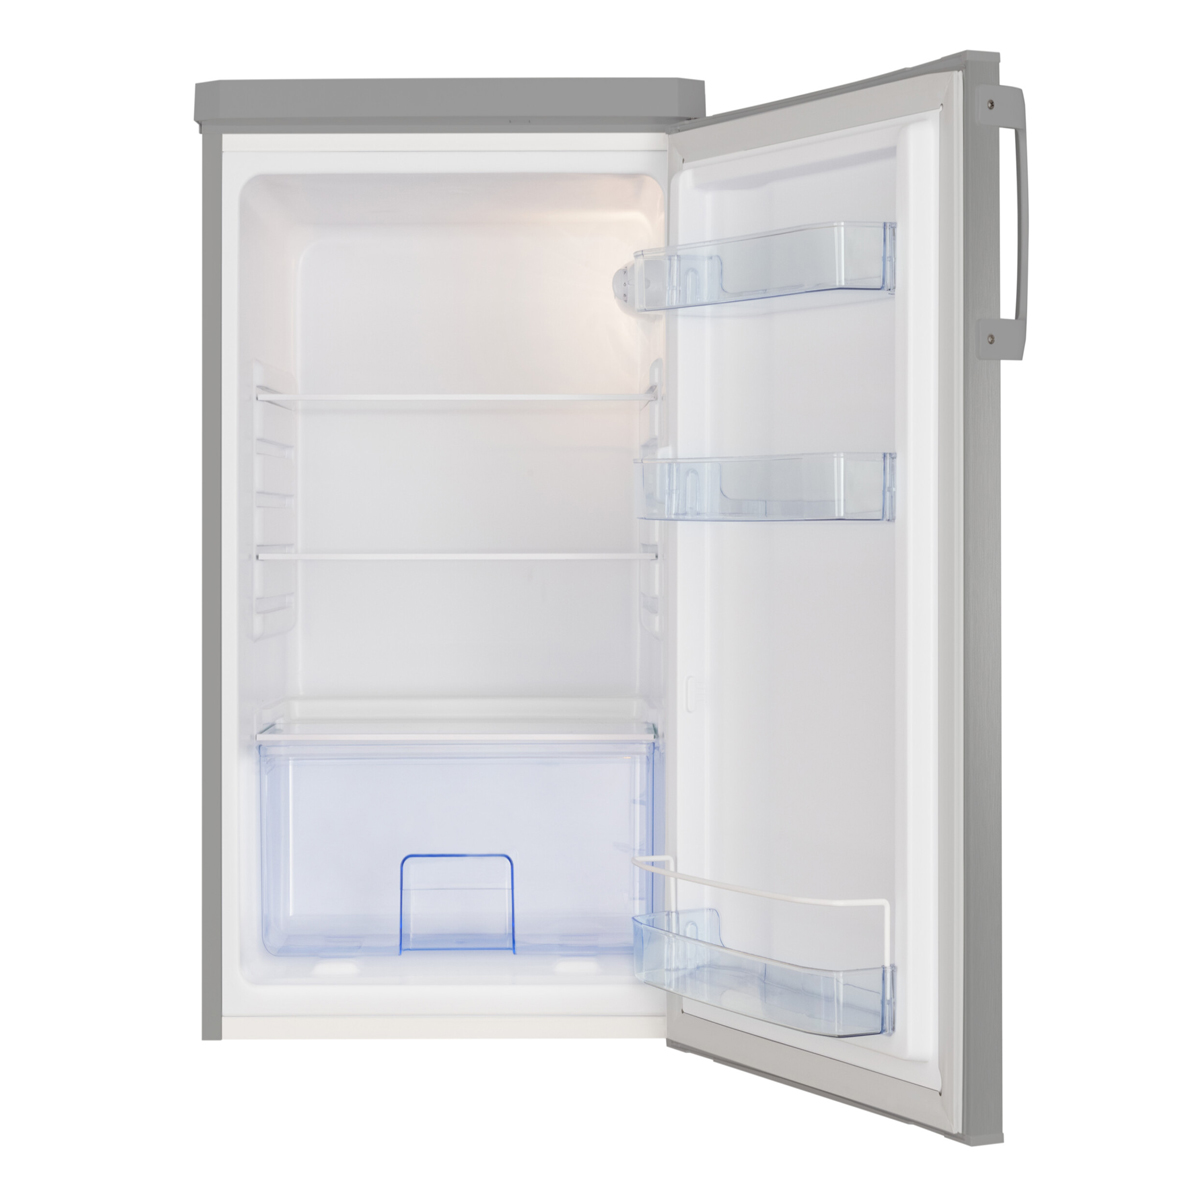 L (E, Vollraumkühlschrank 120 cm Silber) Kühlschrank Silber Edelstahloptik 84,5 hoch, Kühlschrank AMICA freistehend